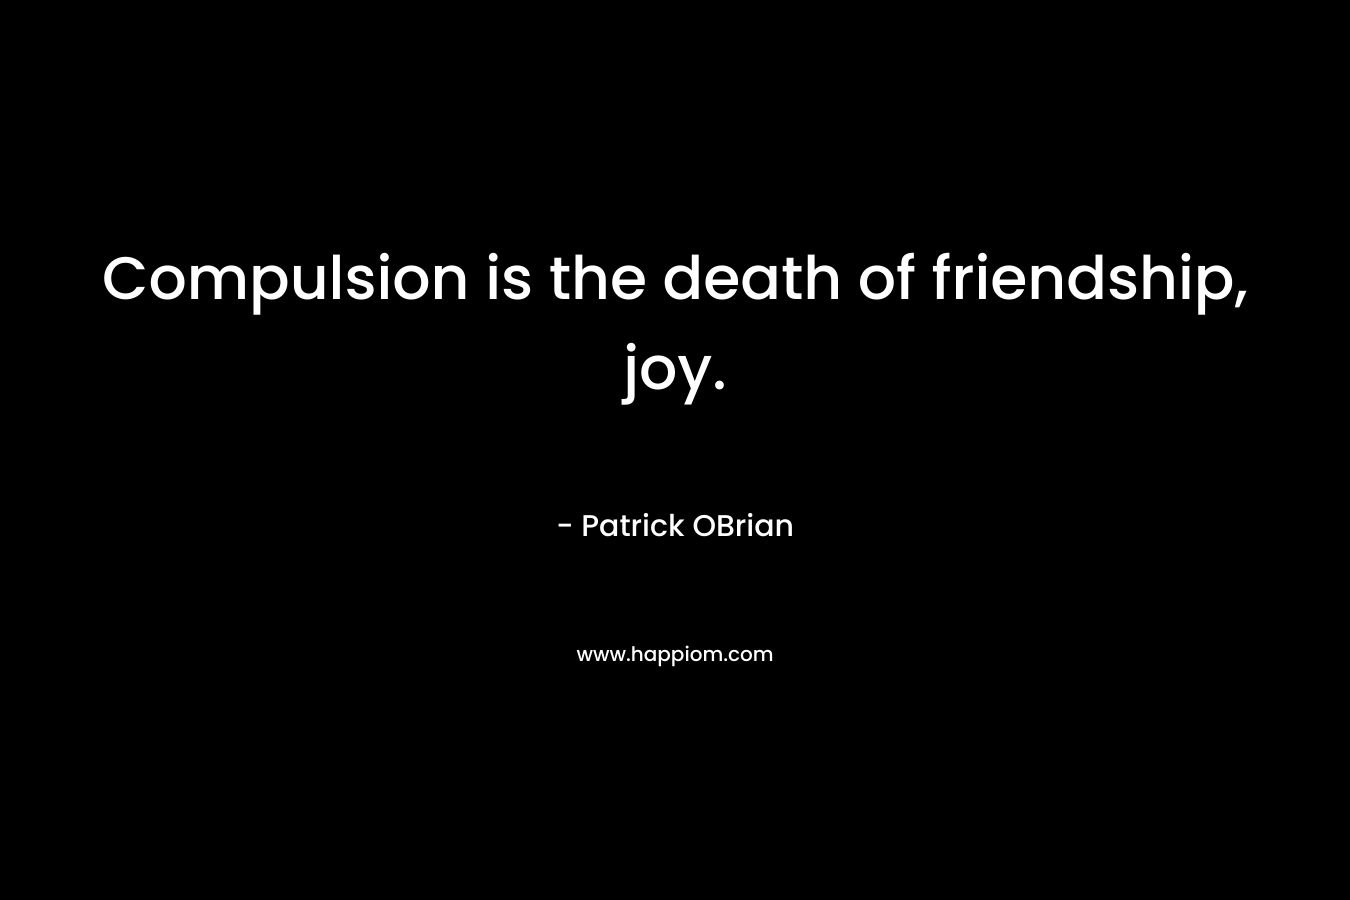 Compulsion is the death of friendship, joy.